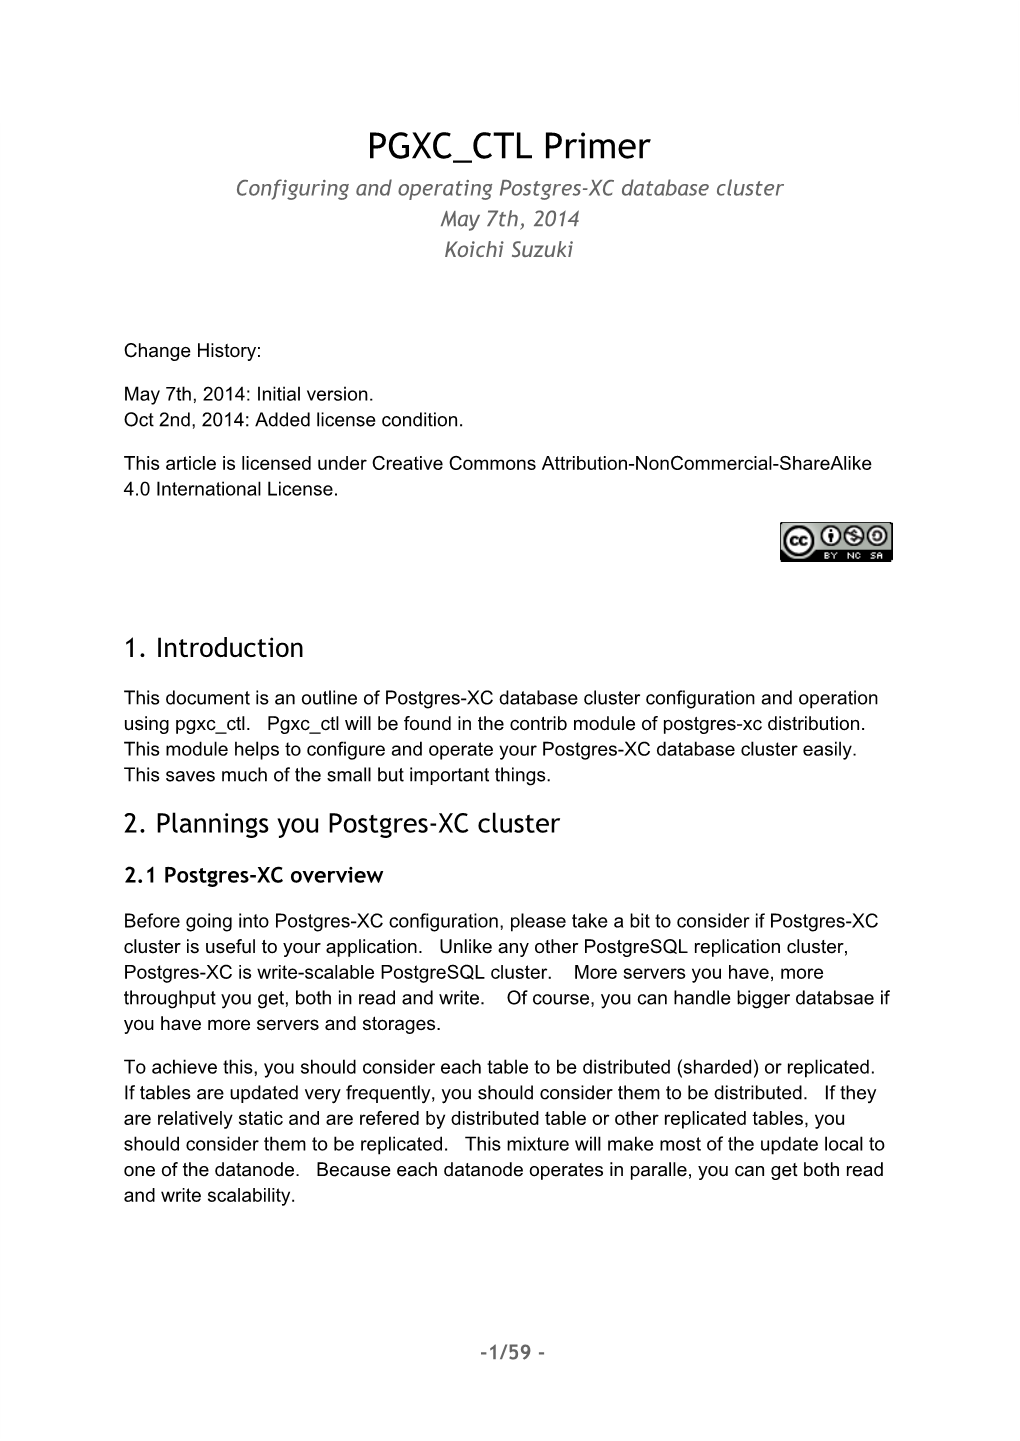 PGXC CTL Primer Configuring and Operating Postgres-XC Database Cluster May 7Th, 2014 Koichi Suzuki